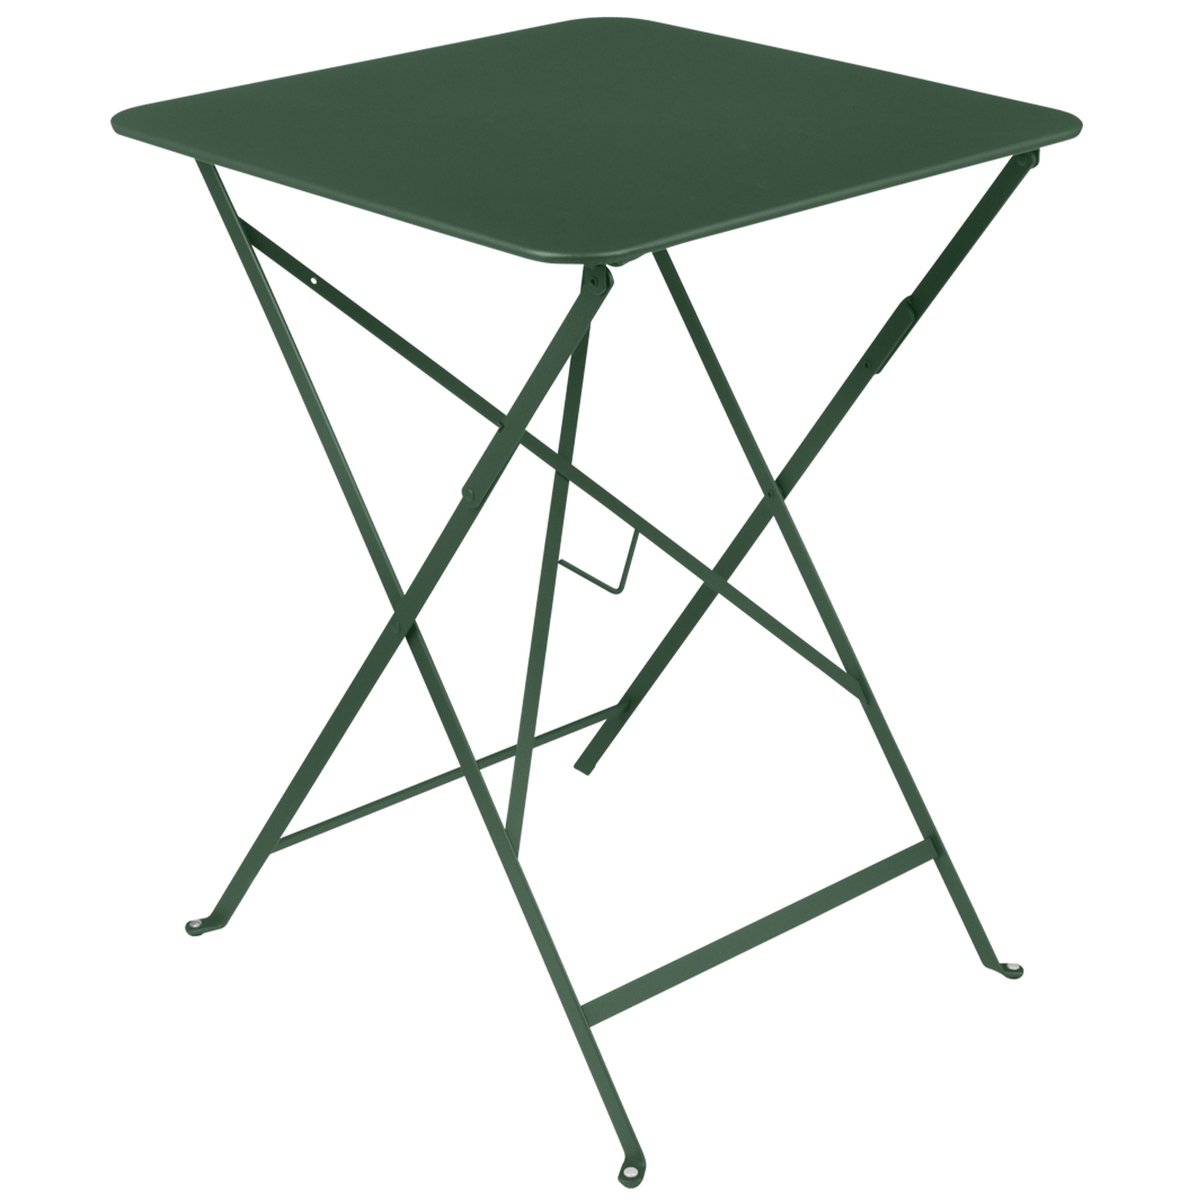 Bistro table, 57 57 cm, green | Finnish Design Shop